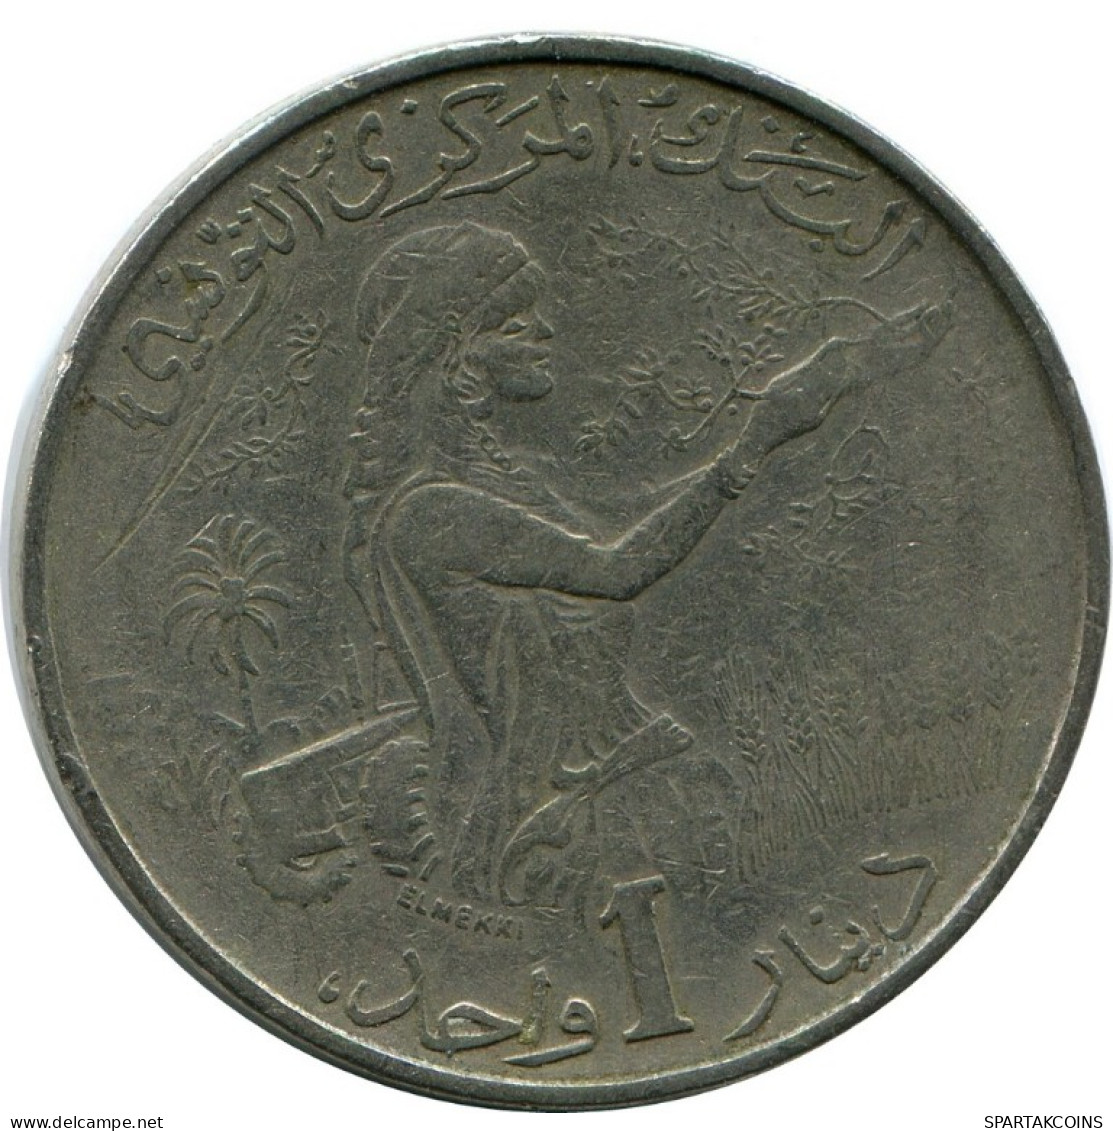 1 DINAR 1976 TUNESIEN TUNISIA Münze #AH926.D.A - Tunisia